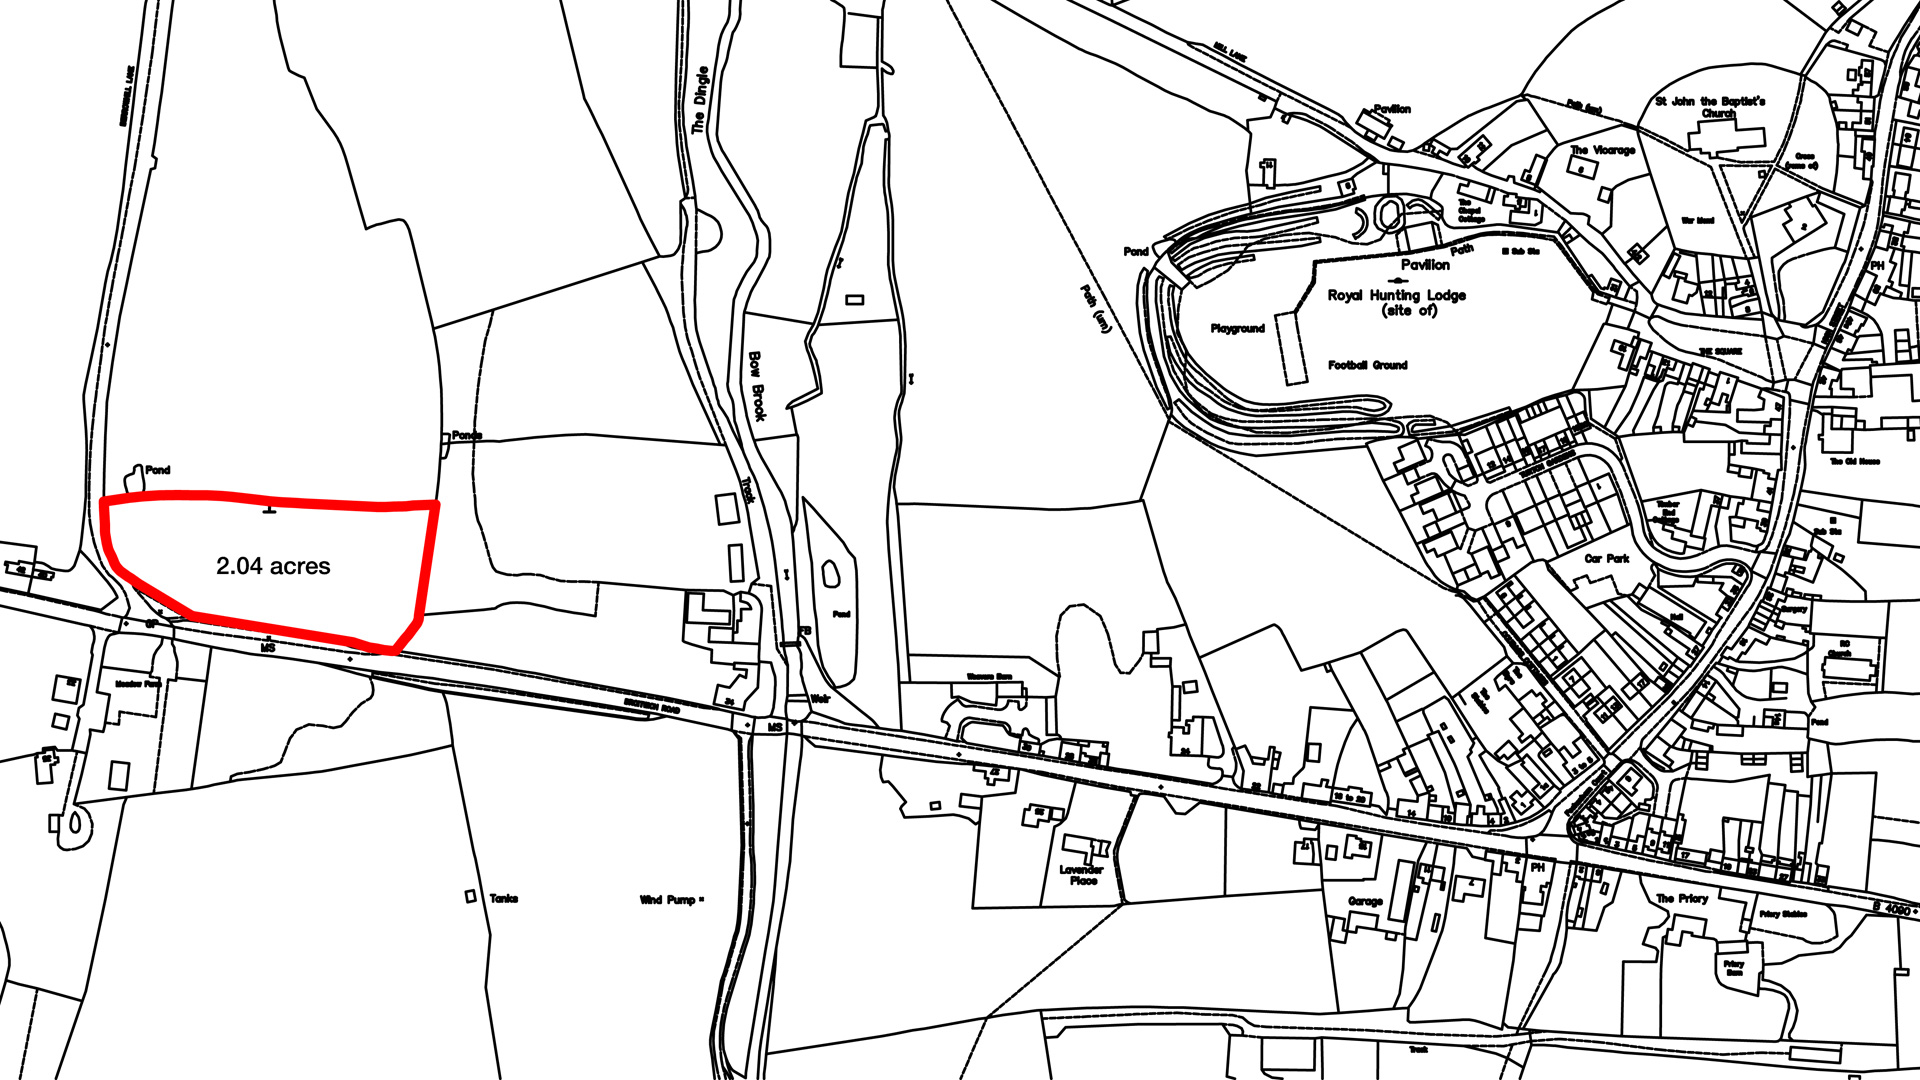 Land for sale in Feckenham site plan